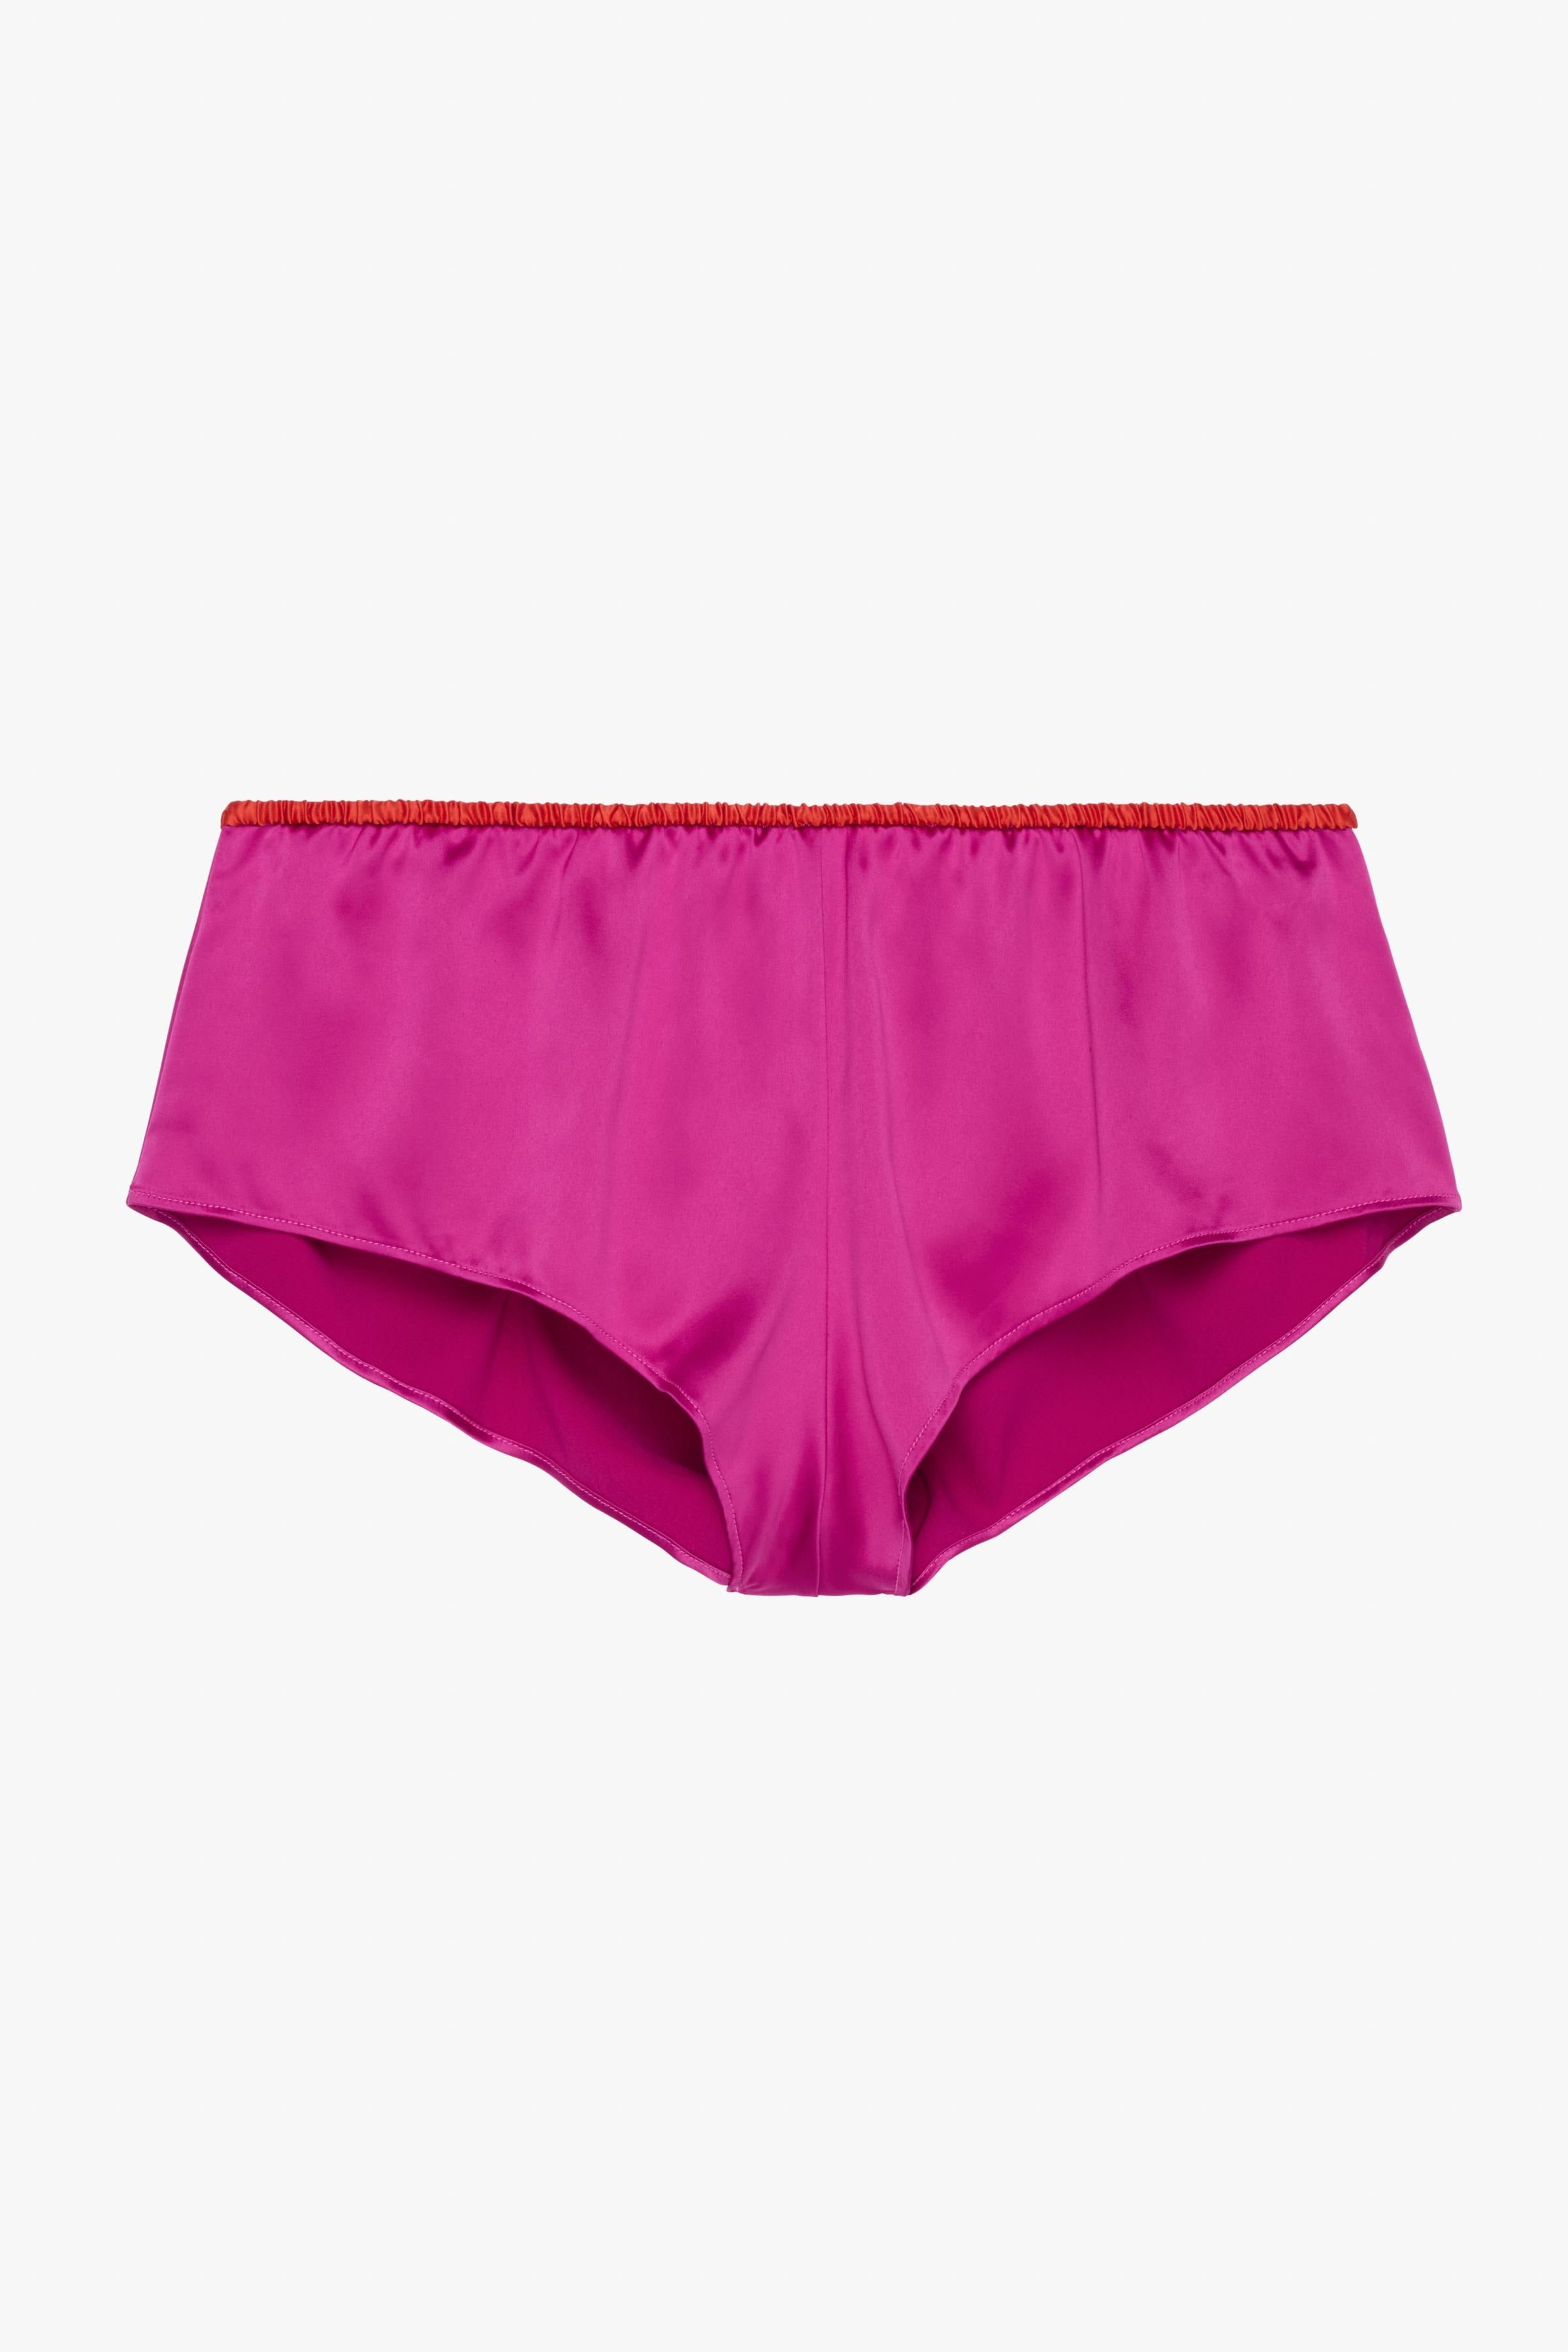 Lululemon + InvisiWear Mid-Rise Boyshort Underwear